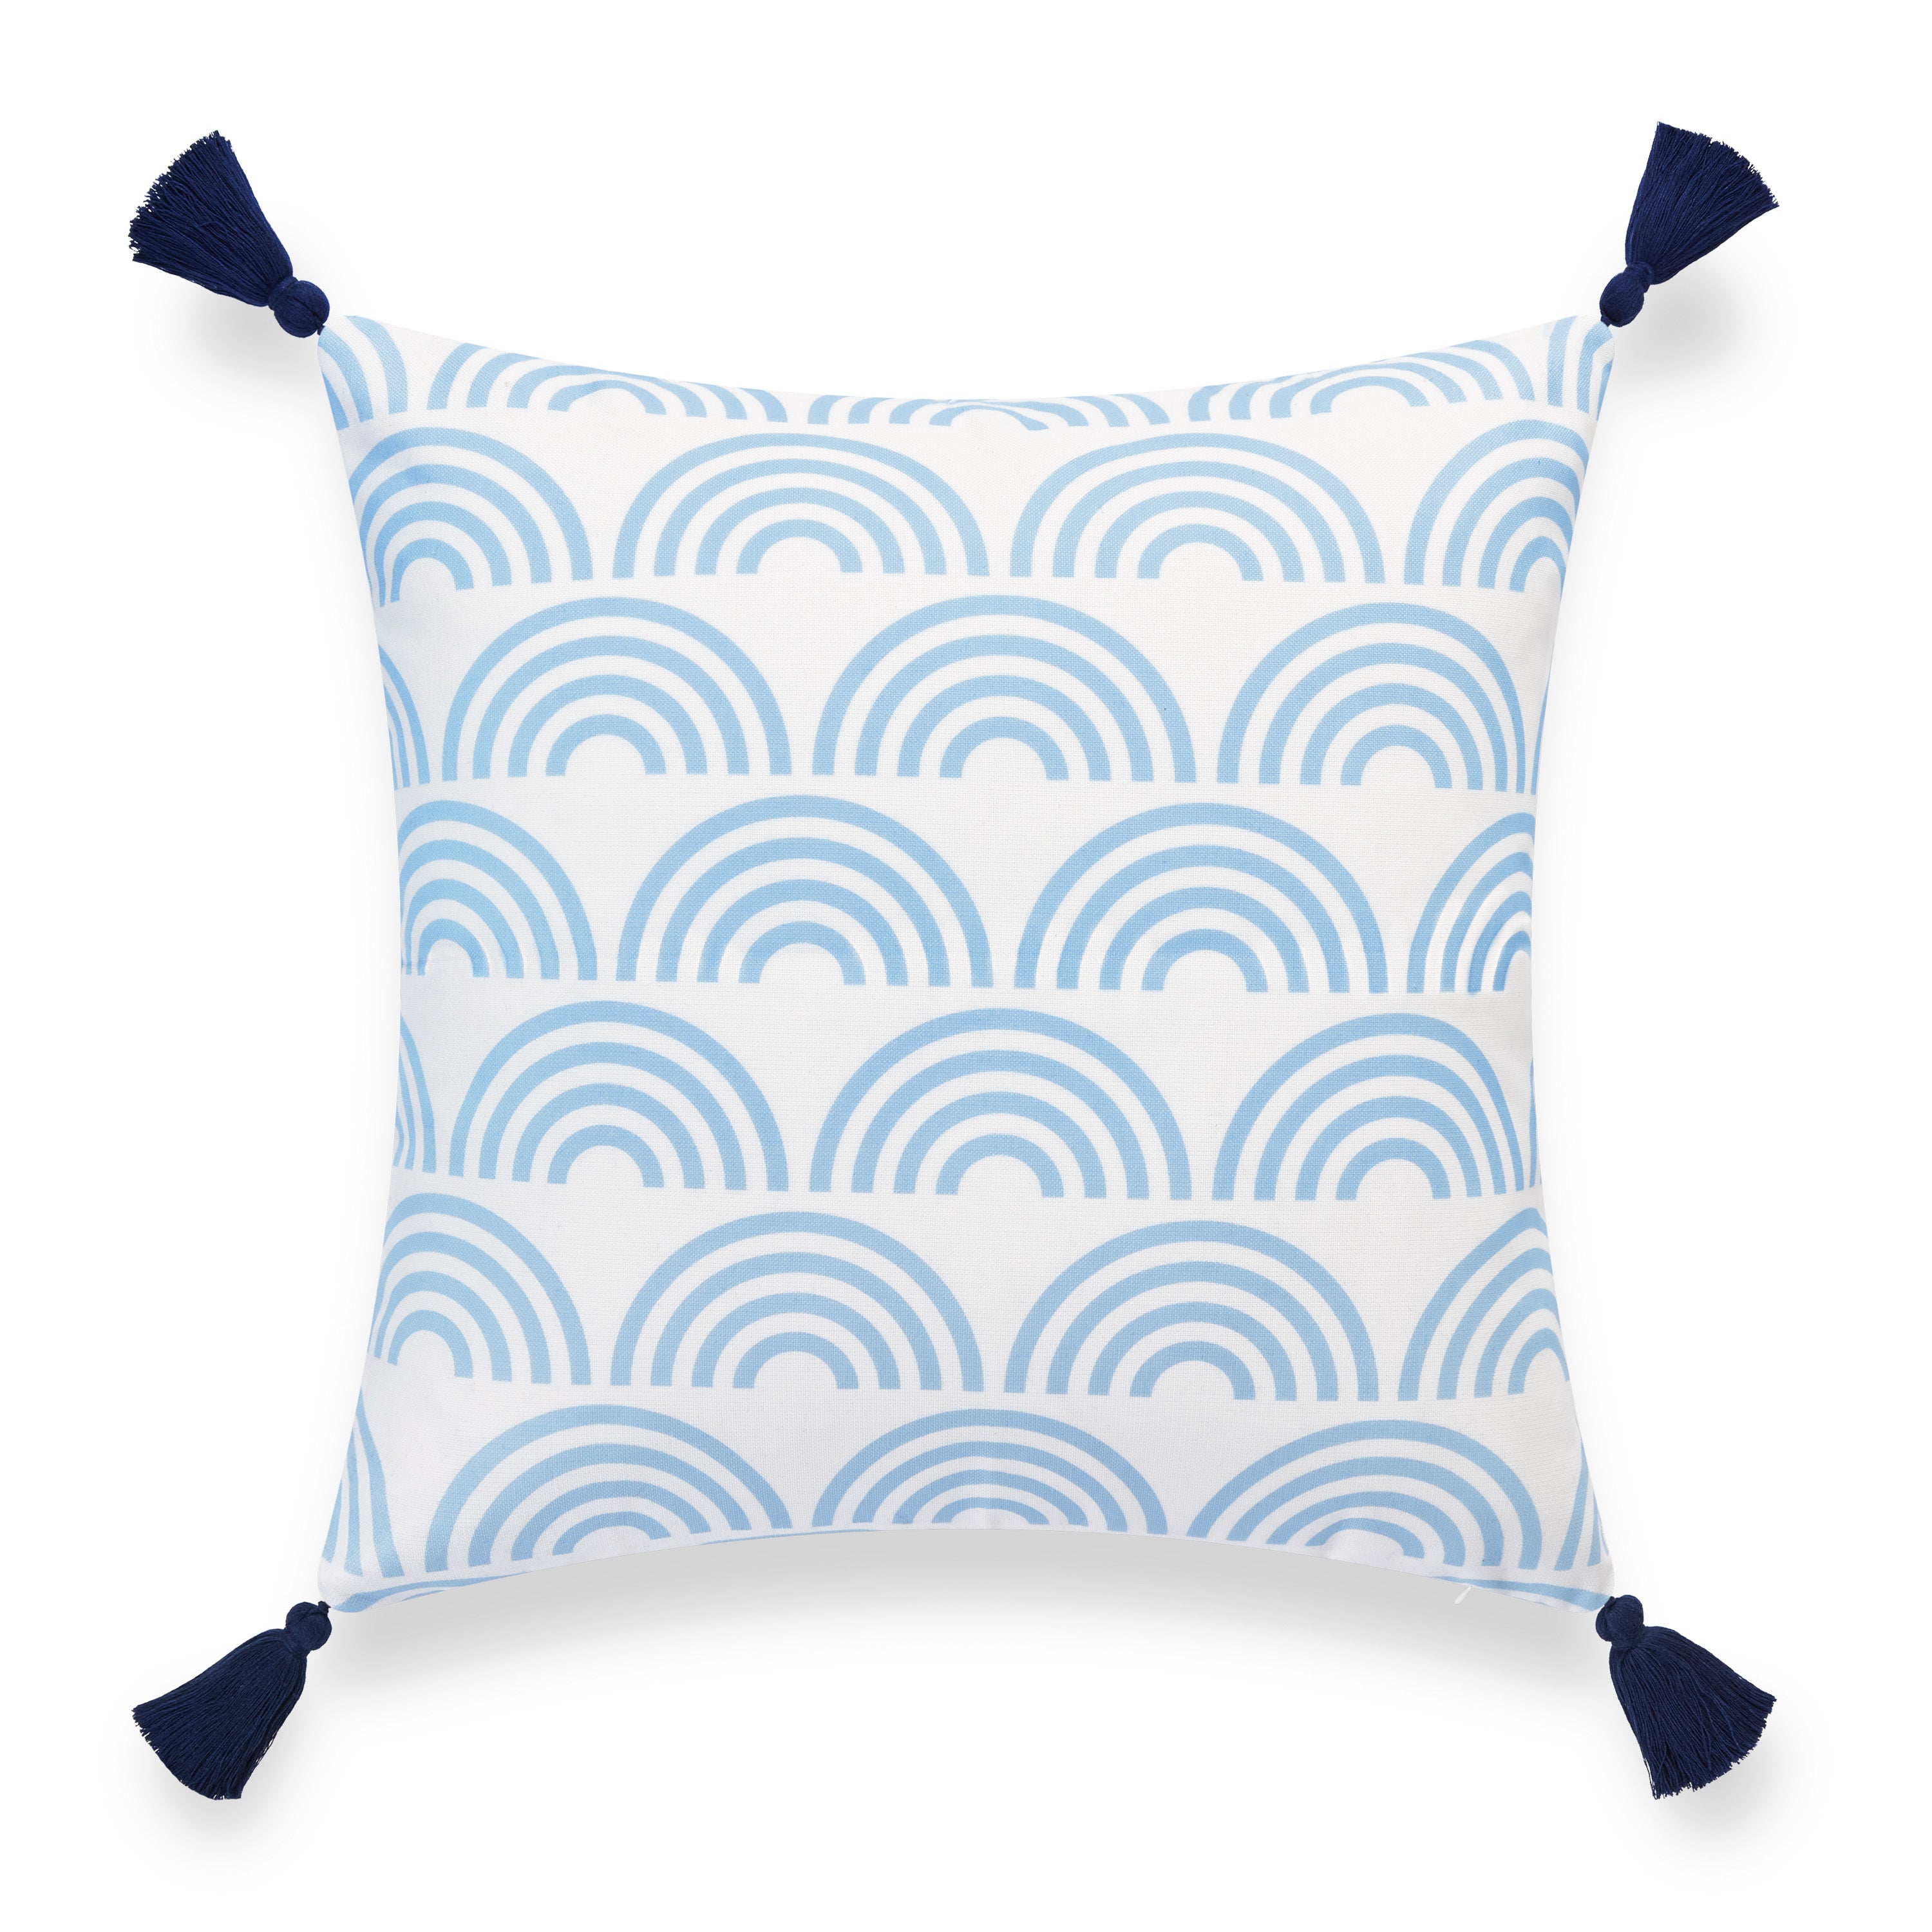 Coastal Hampton Style Indoor Outdoor Throw Pillow Cover, Rainbow Tassel, Baby Blue, 18"x18"